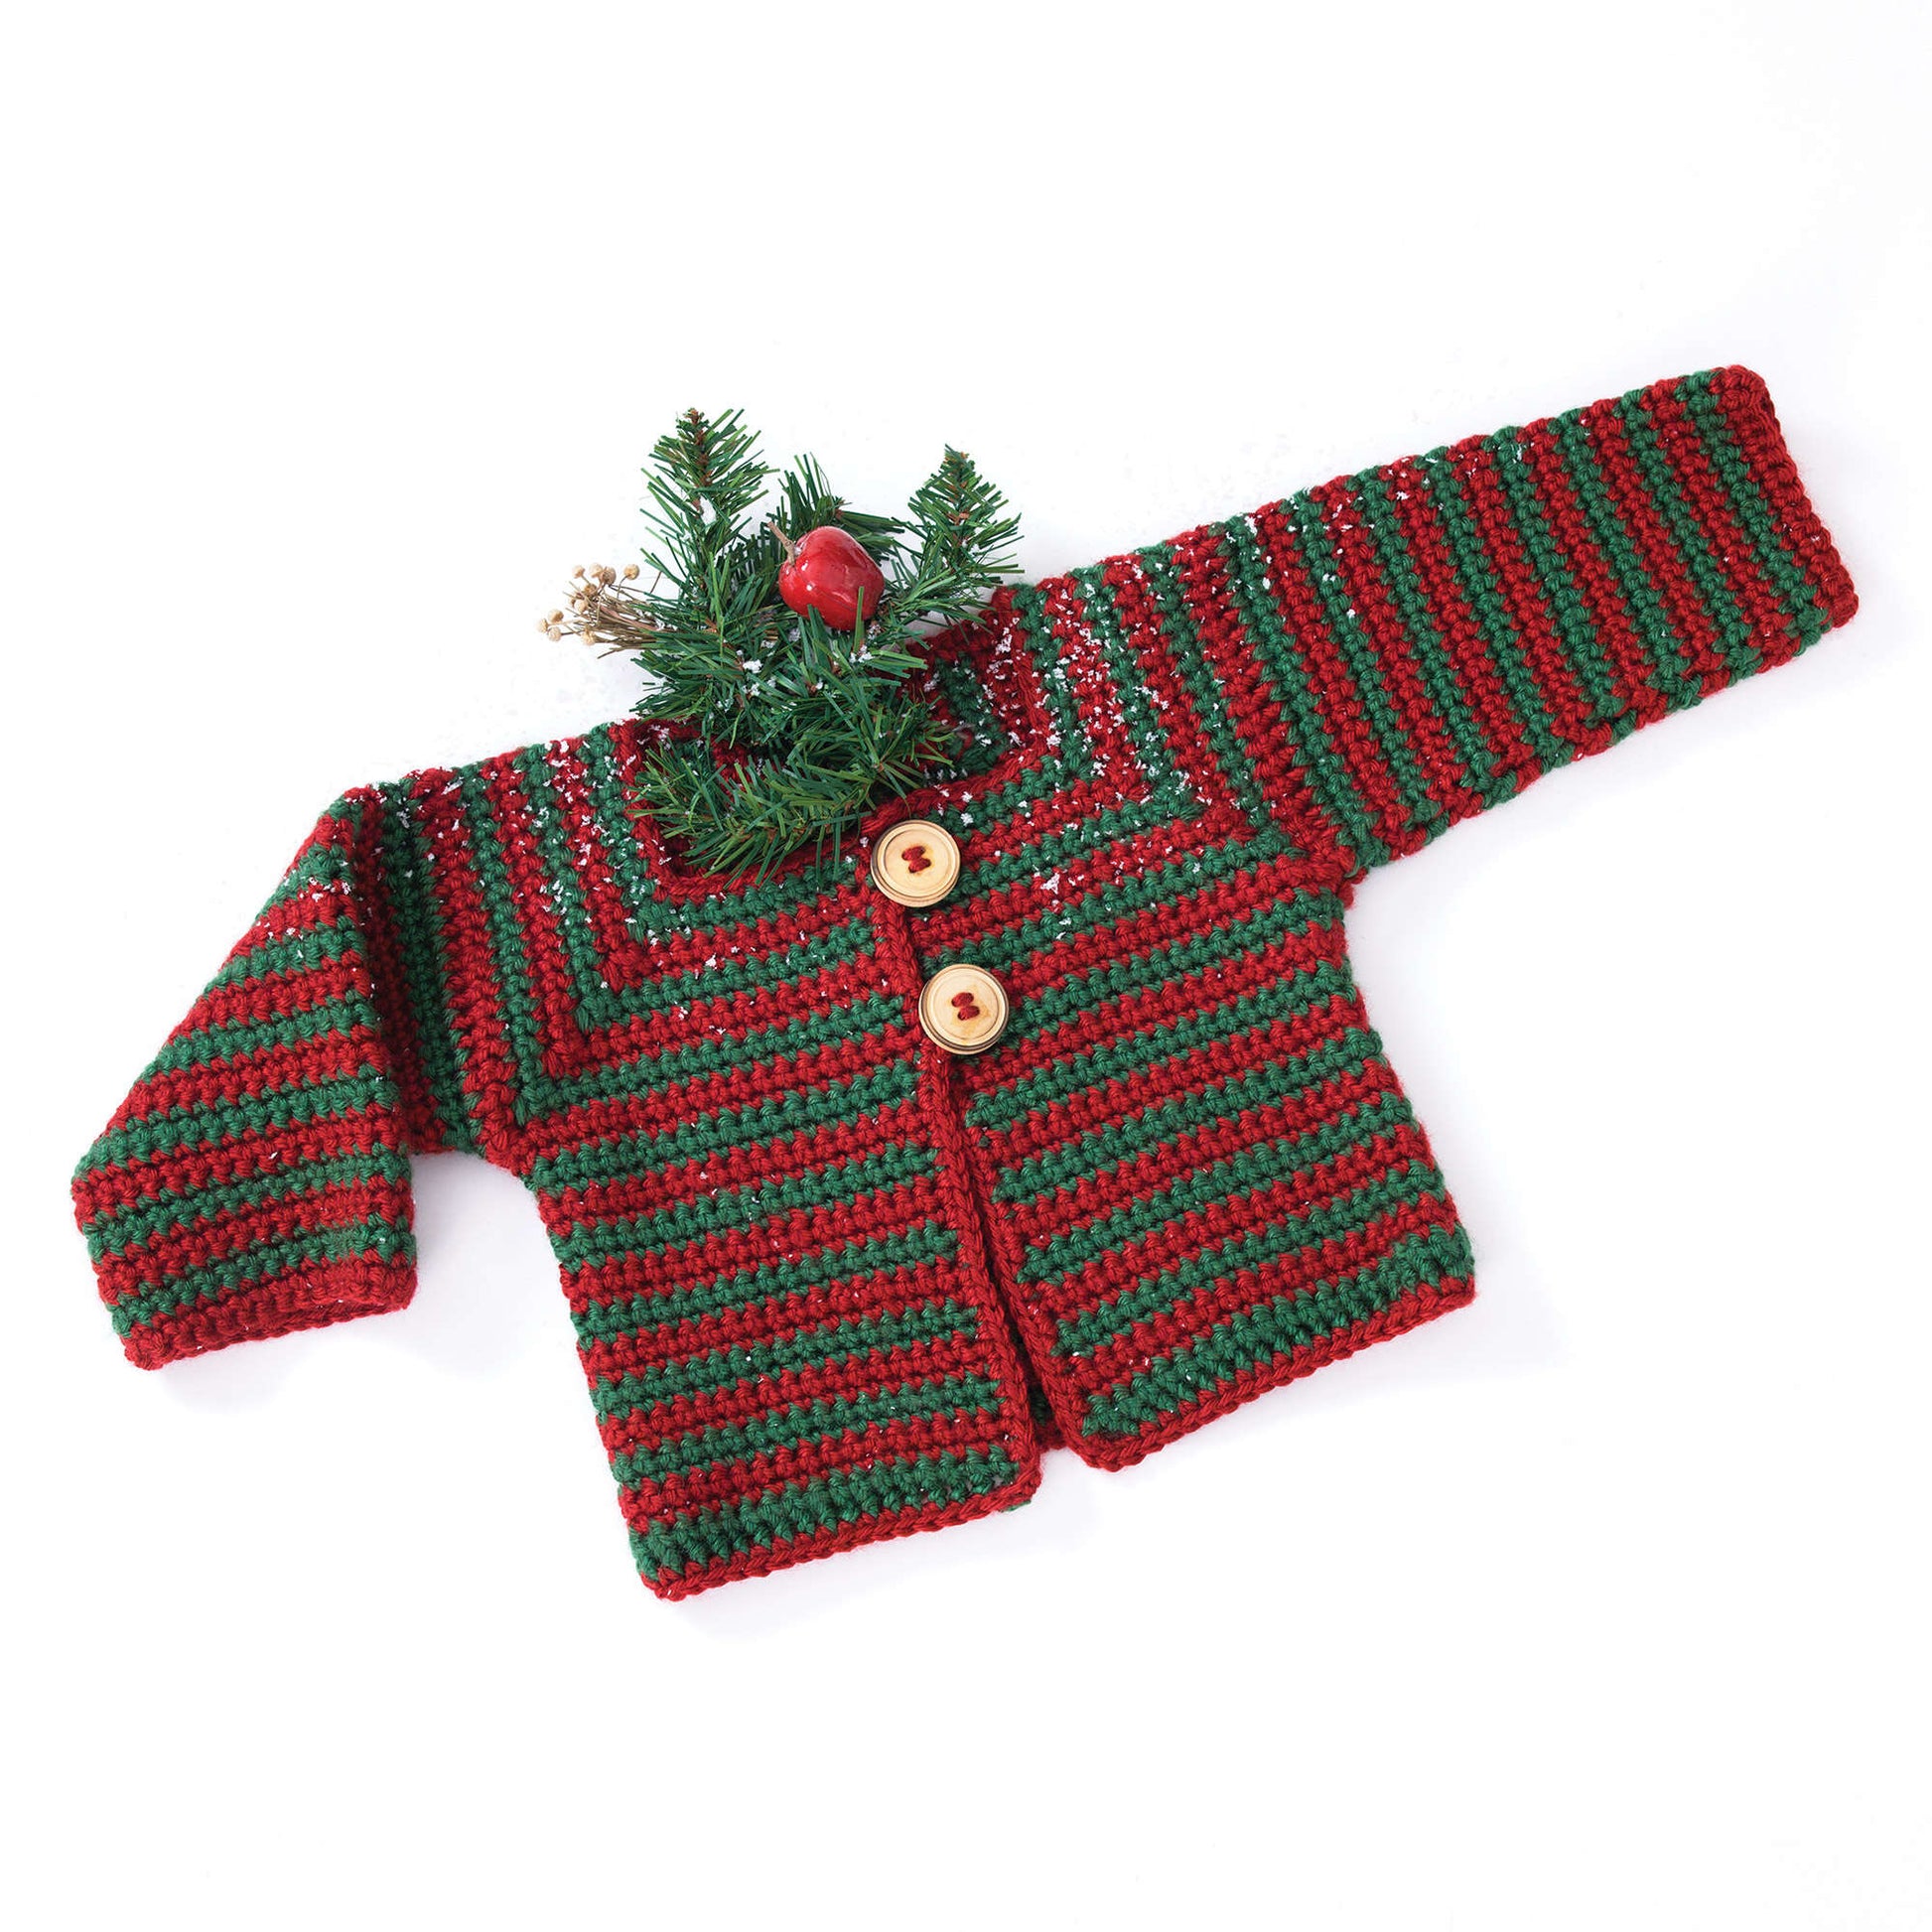 Free Caron Crochet Mitered Striped Baby Sweater Pattern